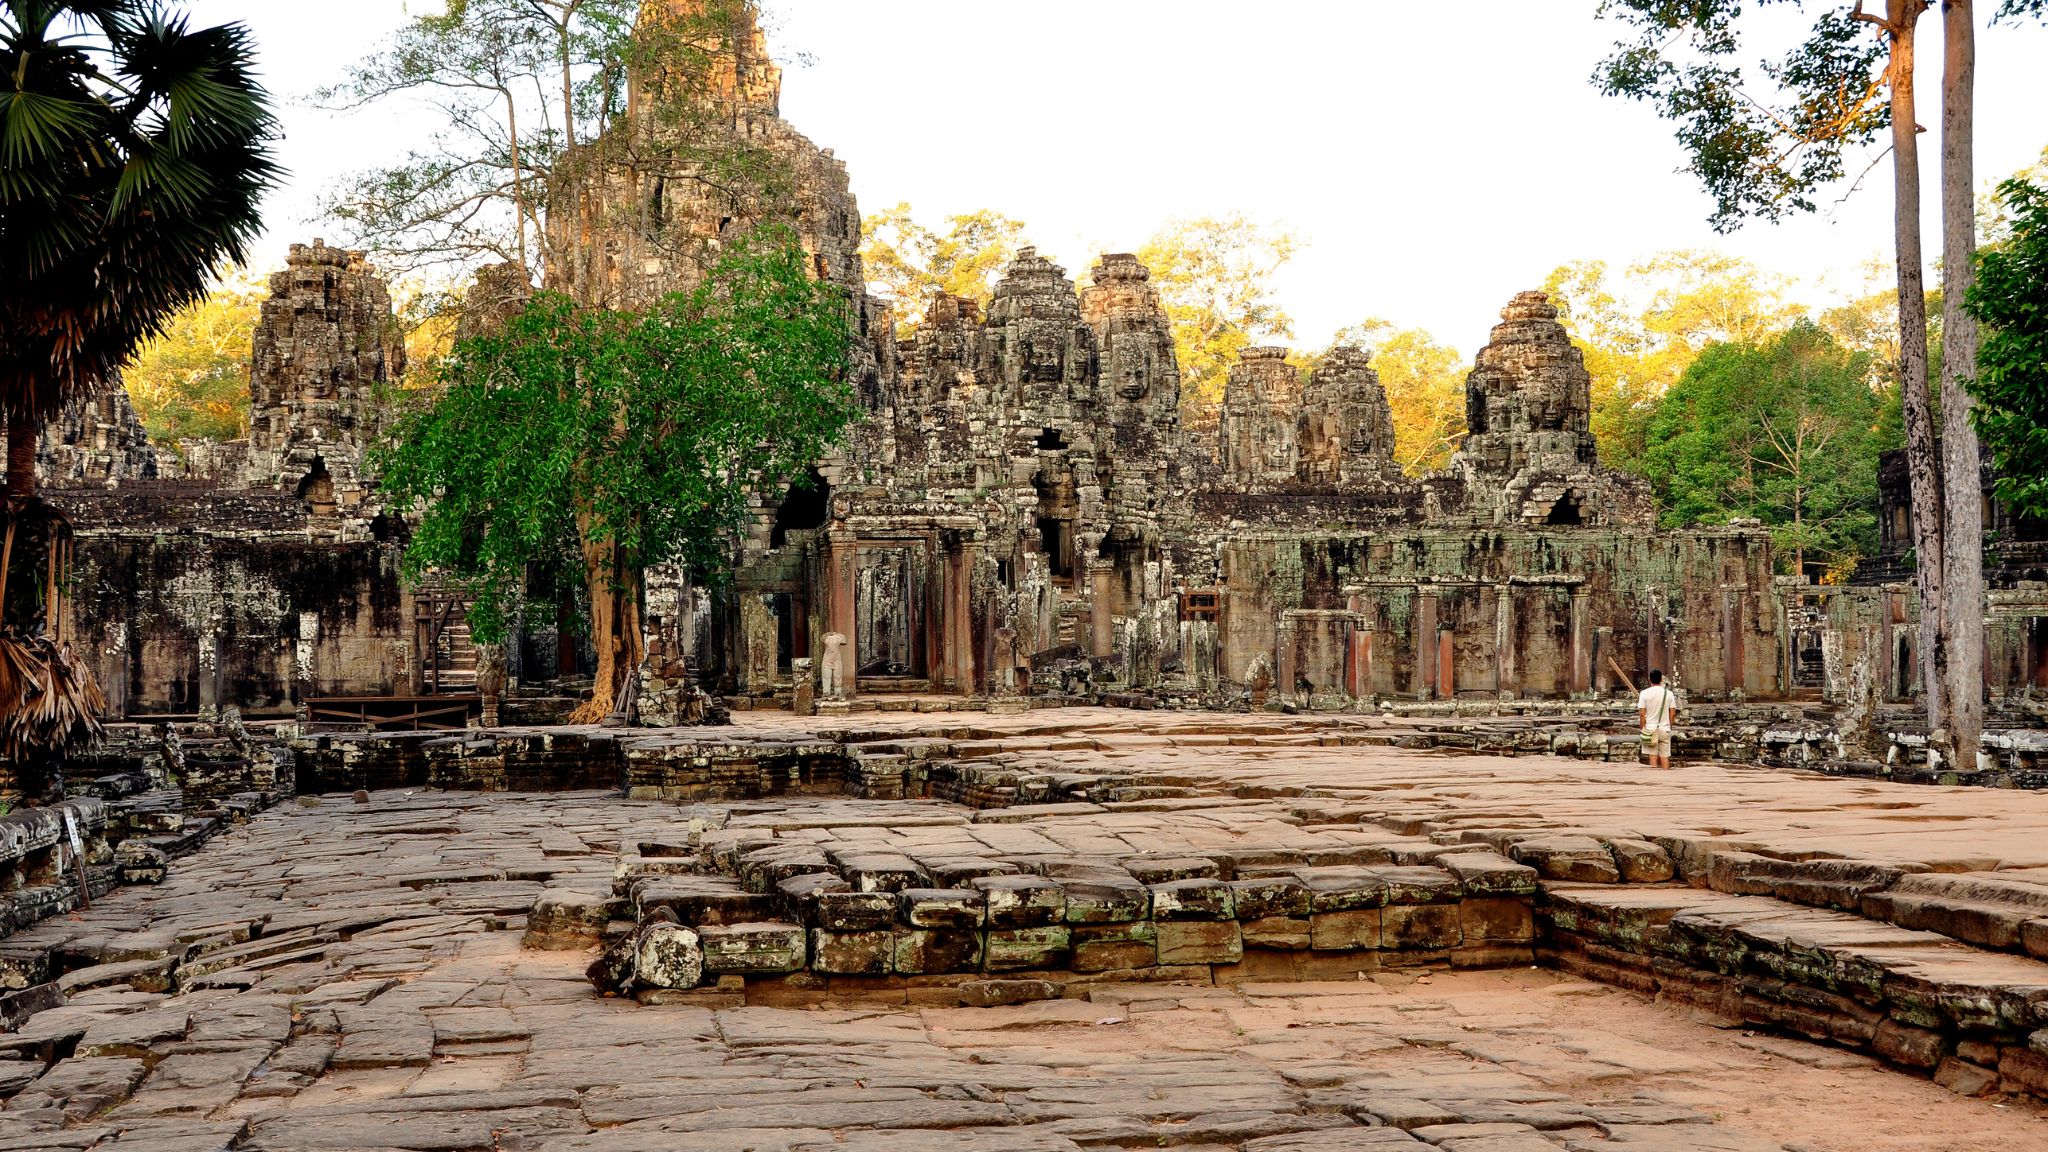 Day 2 Visit The Ancient Capital Of Angkor Thom